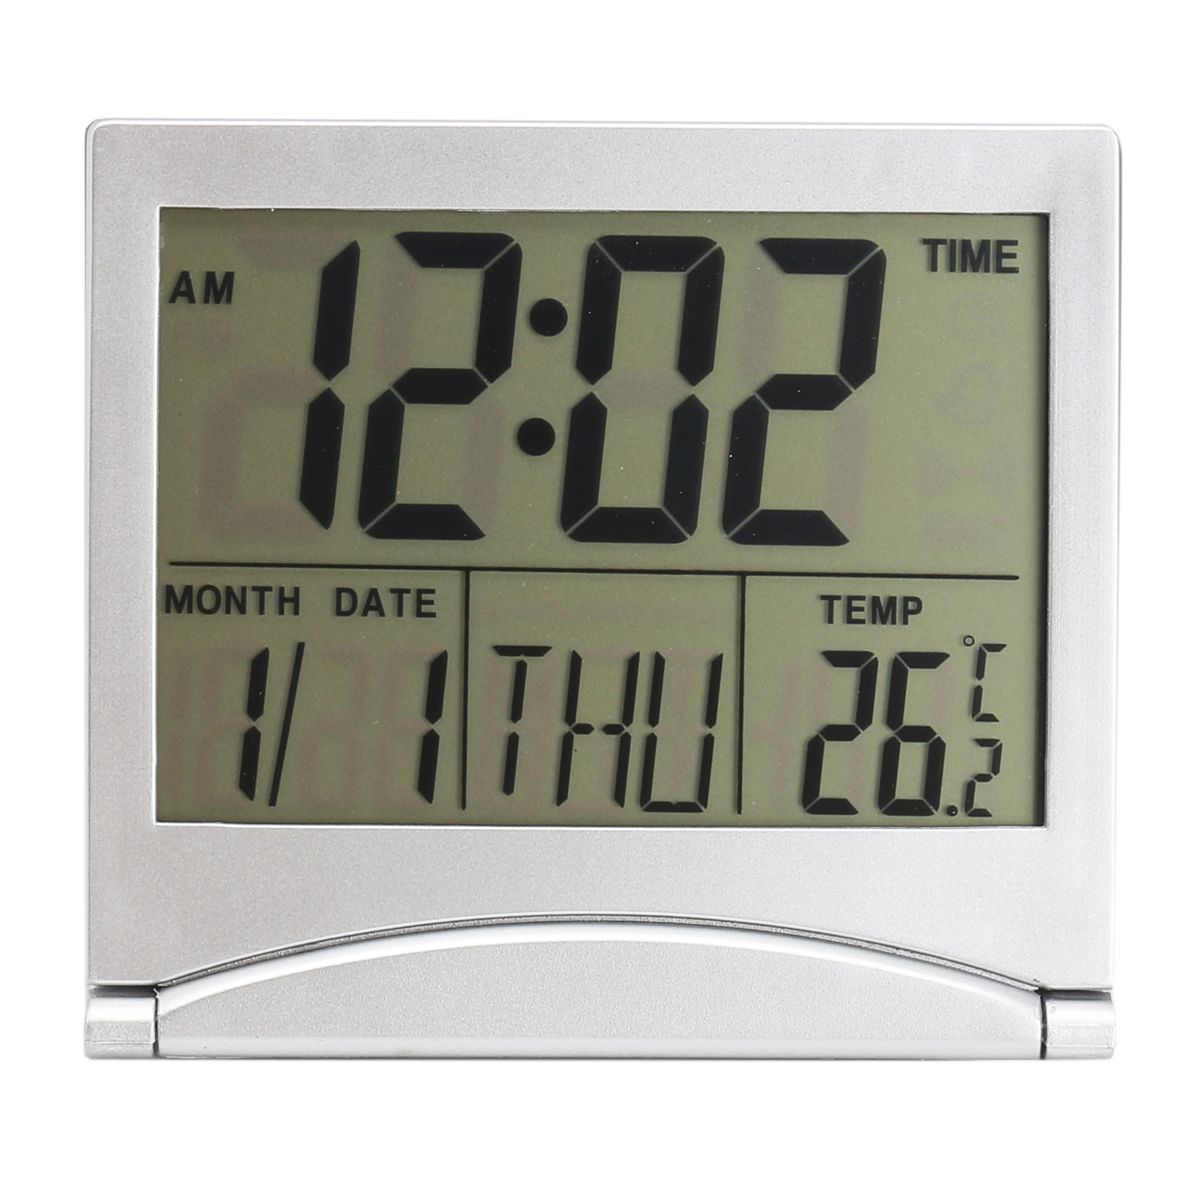 Digital-LCD-Screen-Travel-Alarm-Clocks-Table-Desk-Thermometer-Timer-Calendar-1164394